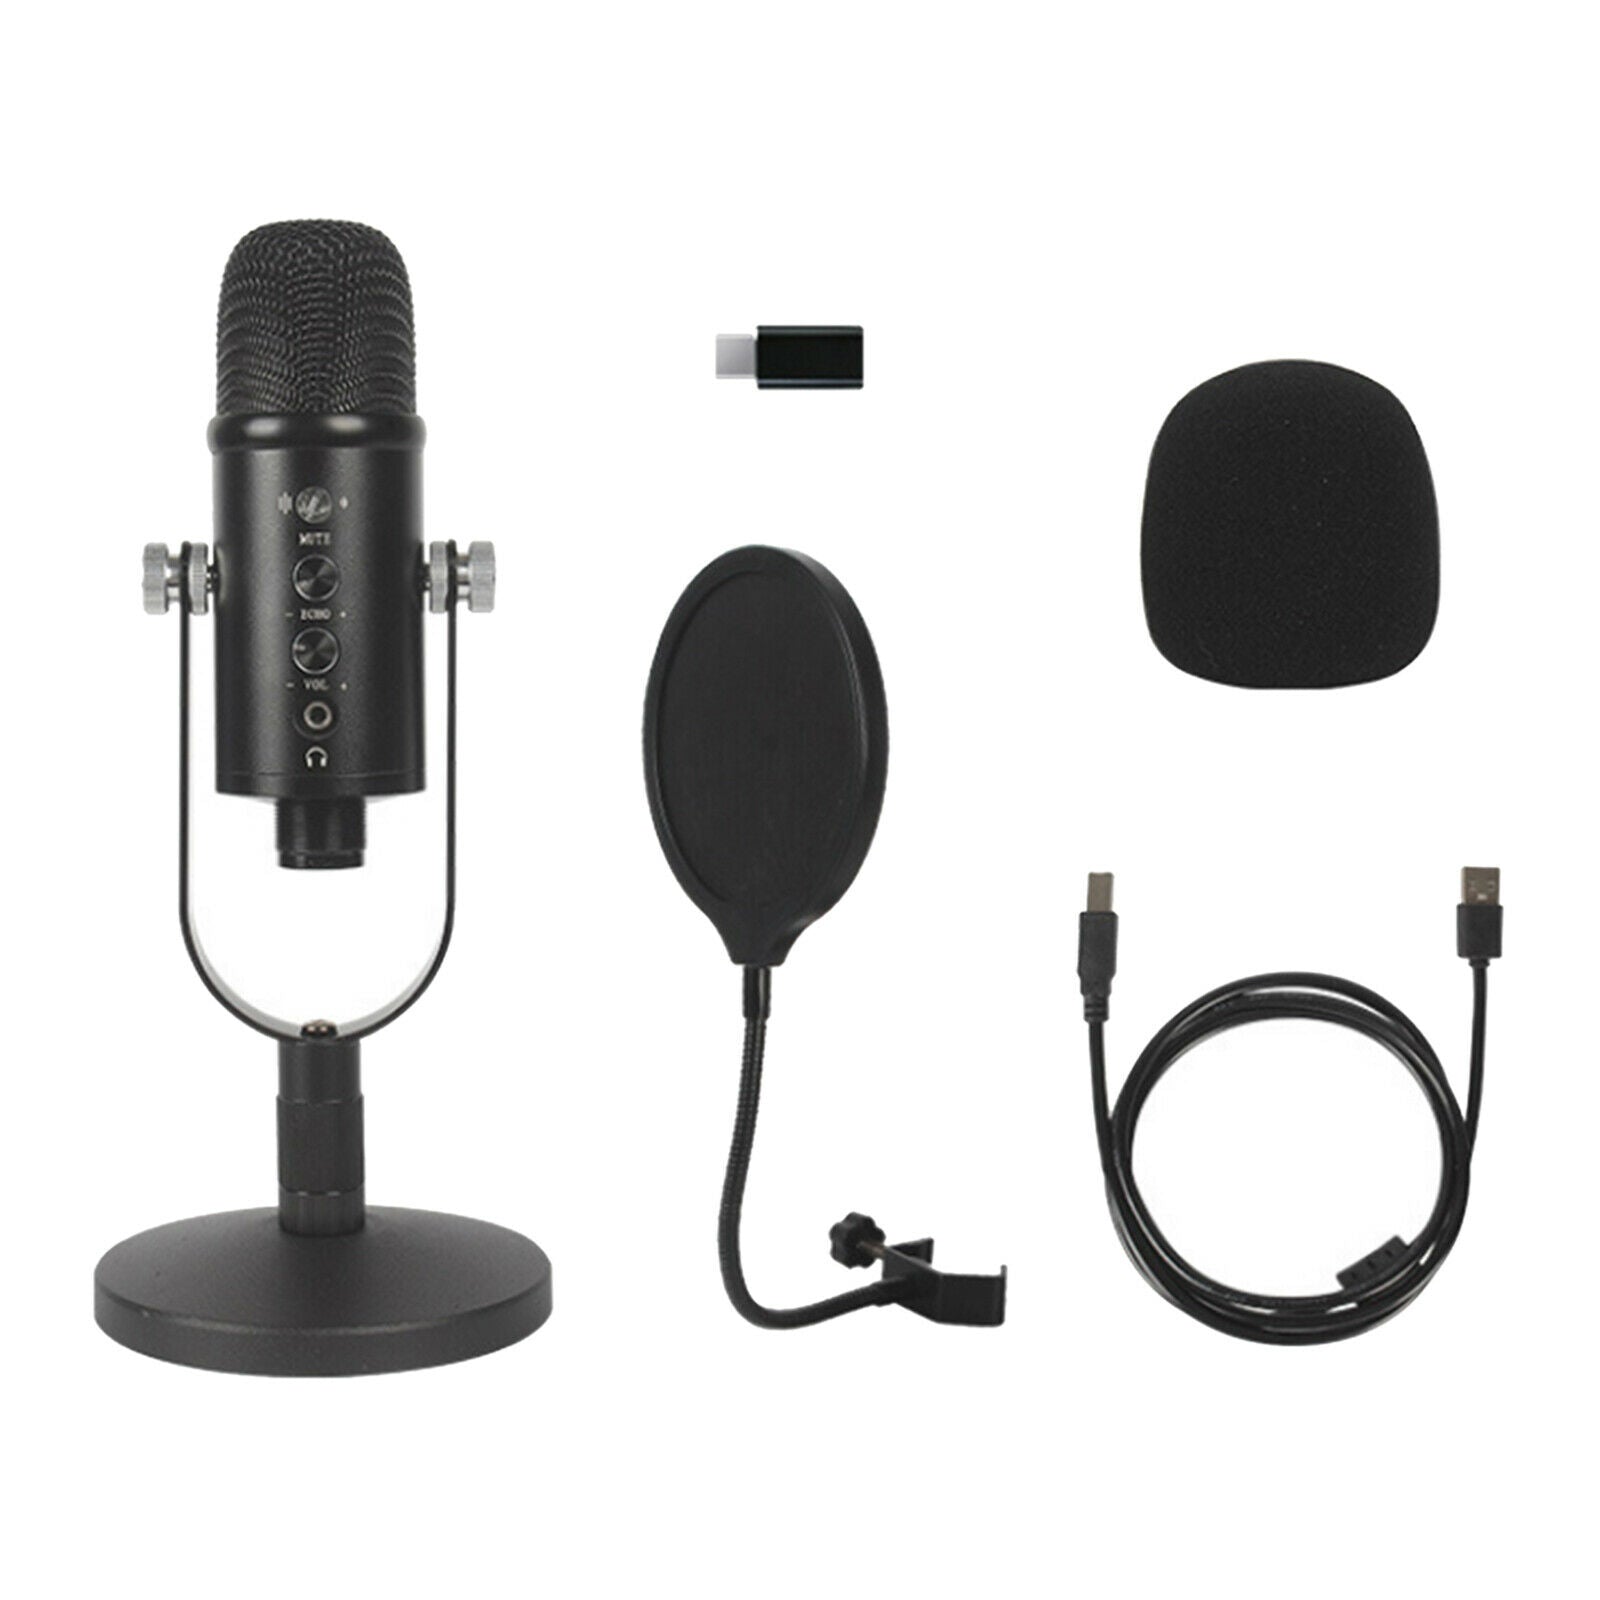 USB Condenser Microphone Kit Studio Broadcast Sound Recording Desk Stand